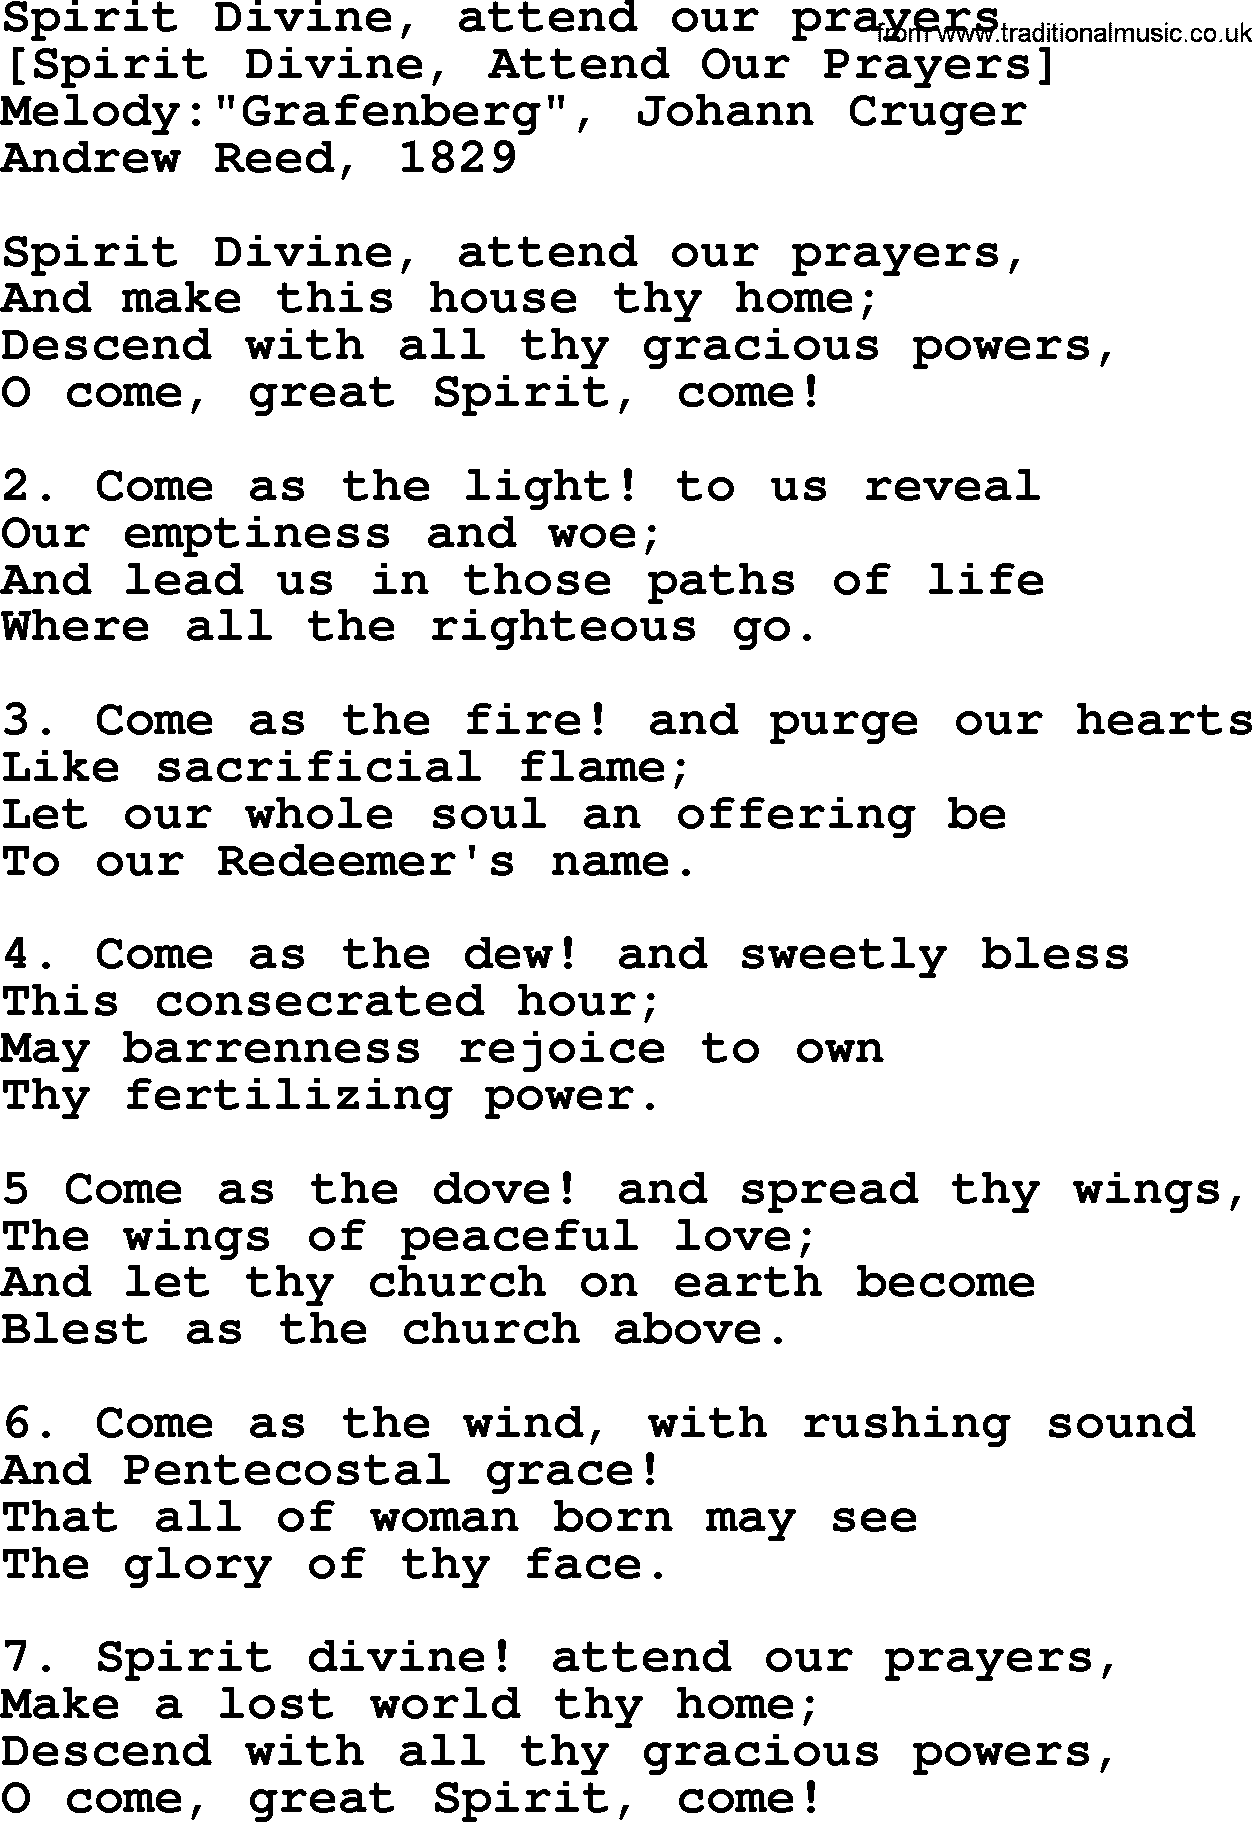 Old English Song: Spirit Divine, Attend Our Prayers lyrics